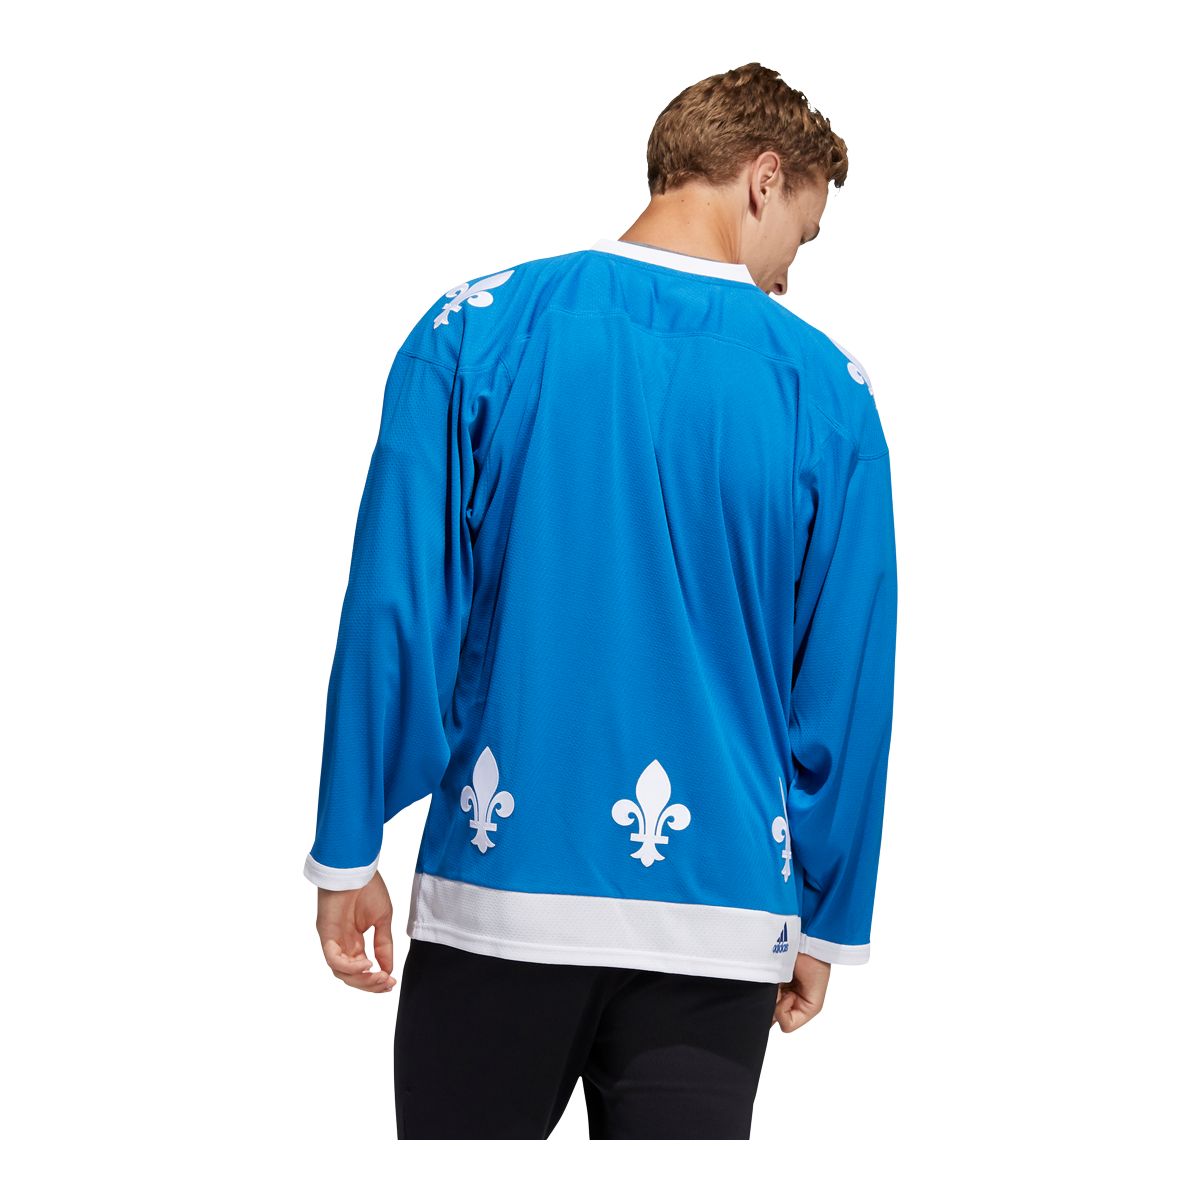 Top-selling item] Custom NHL Quebec Nordiques Blue Version Hockey Jersey